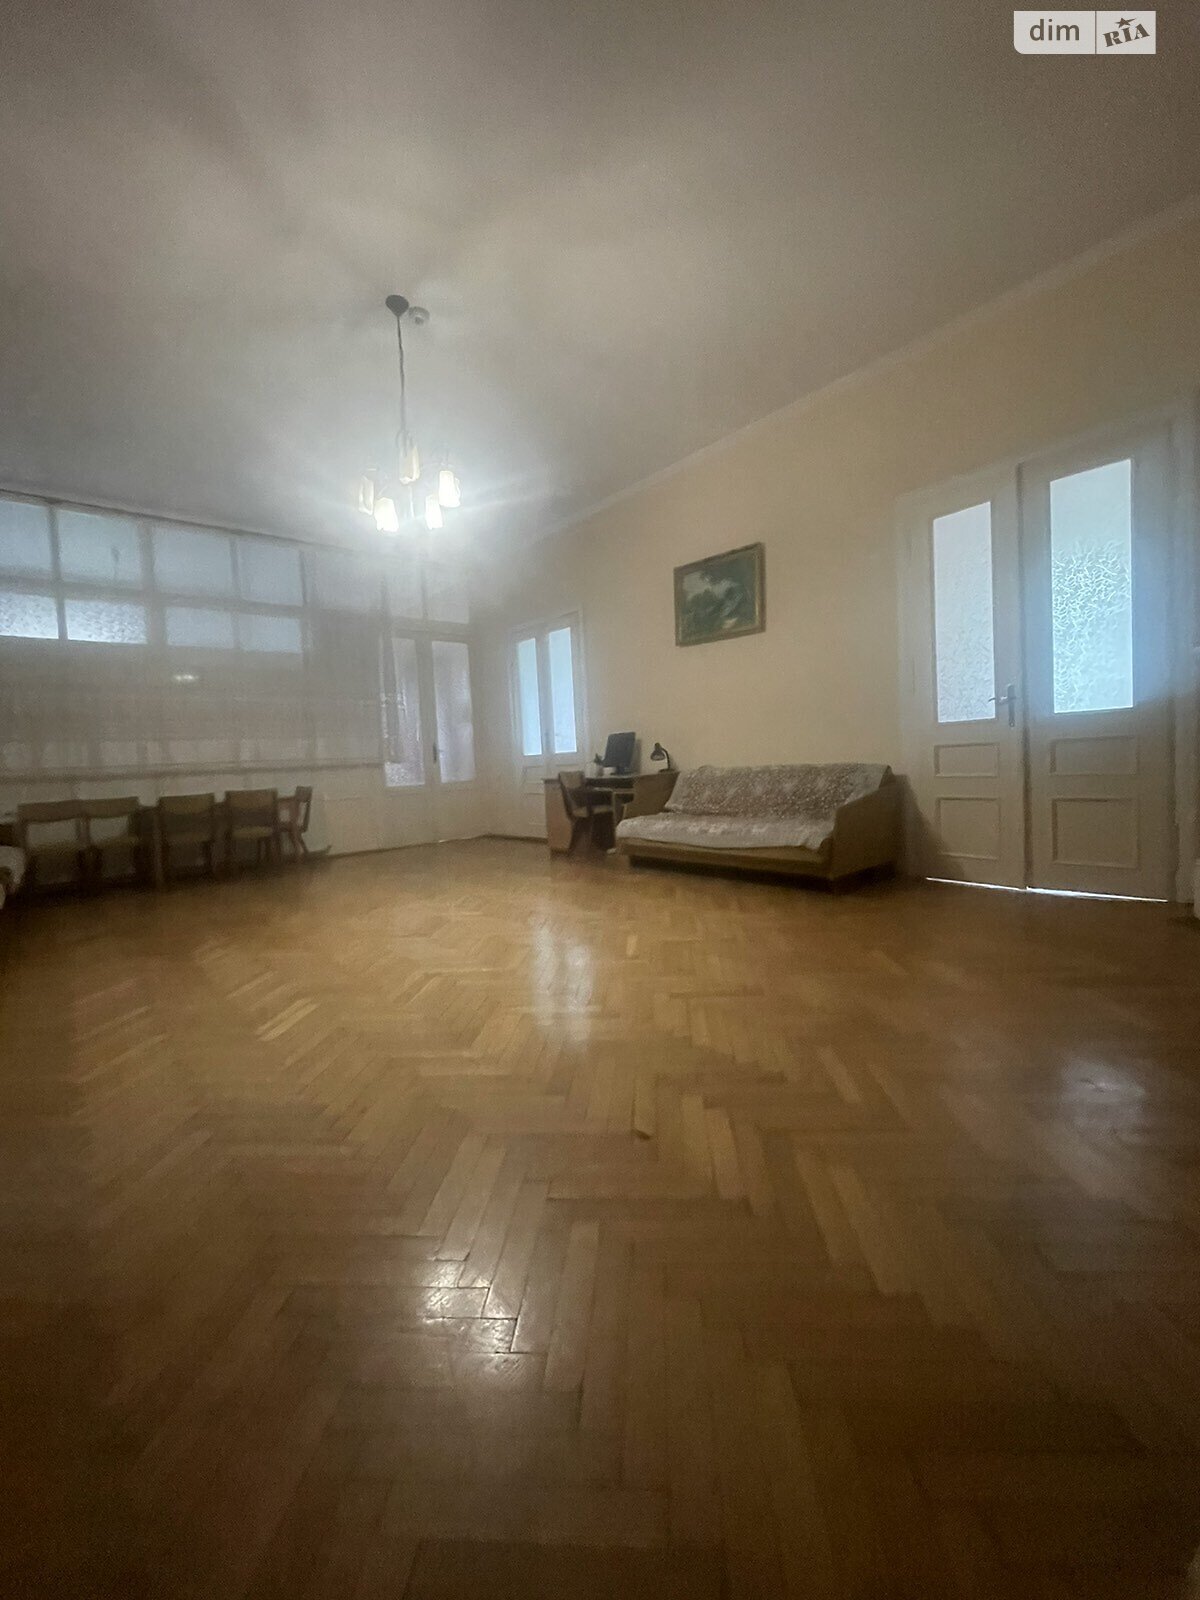 Продажа трехкомнатной квартиры в Черновцах, на ул. Хотинская 4В, район Хотинский фото 1